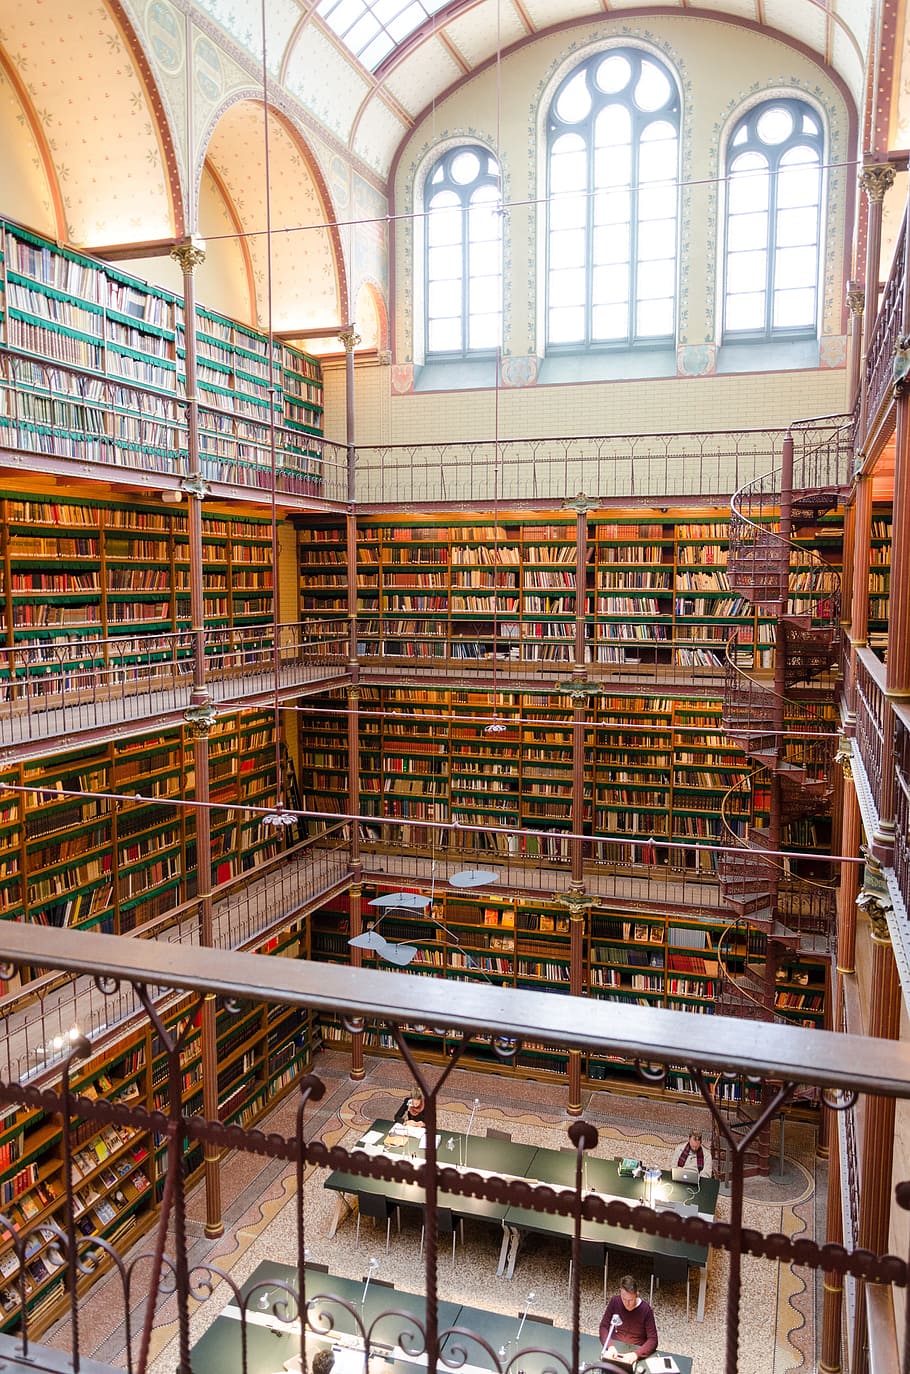 interior perpustakaan, perpustakaan, interior, buku, amsterdam, rijksmuseum, pengunjung, di dalam ruangan, rak, rak buku